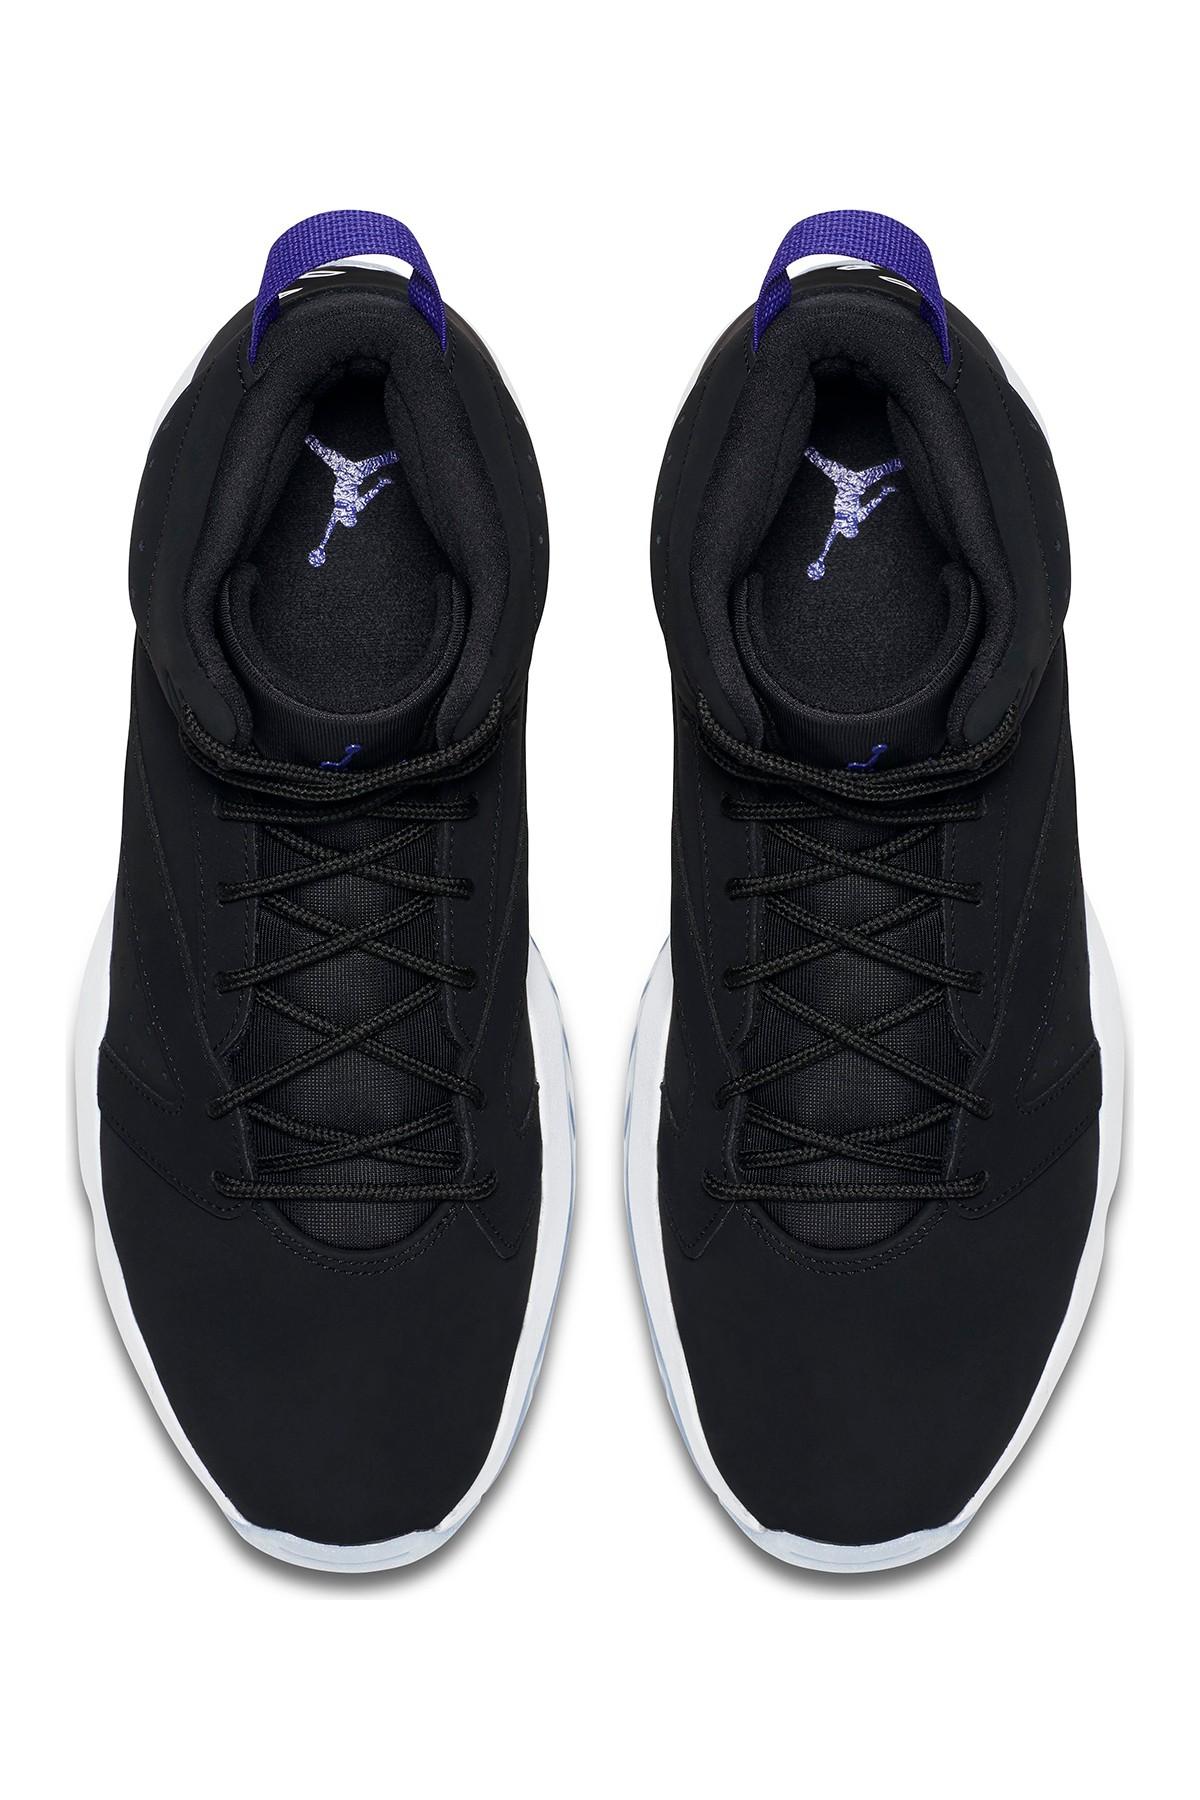 Nike Jordan Lift Off Sneaker in Black for Men - Lyst